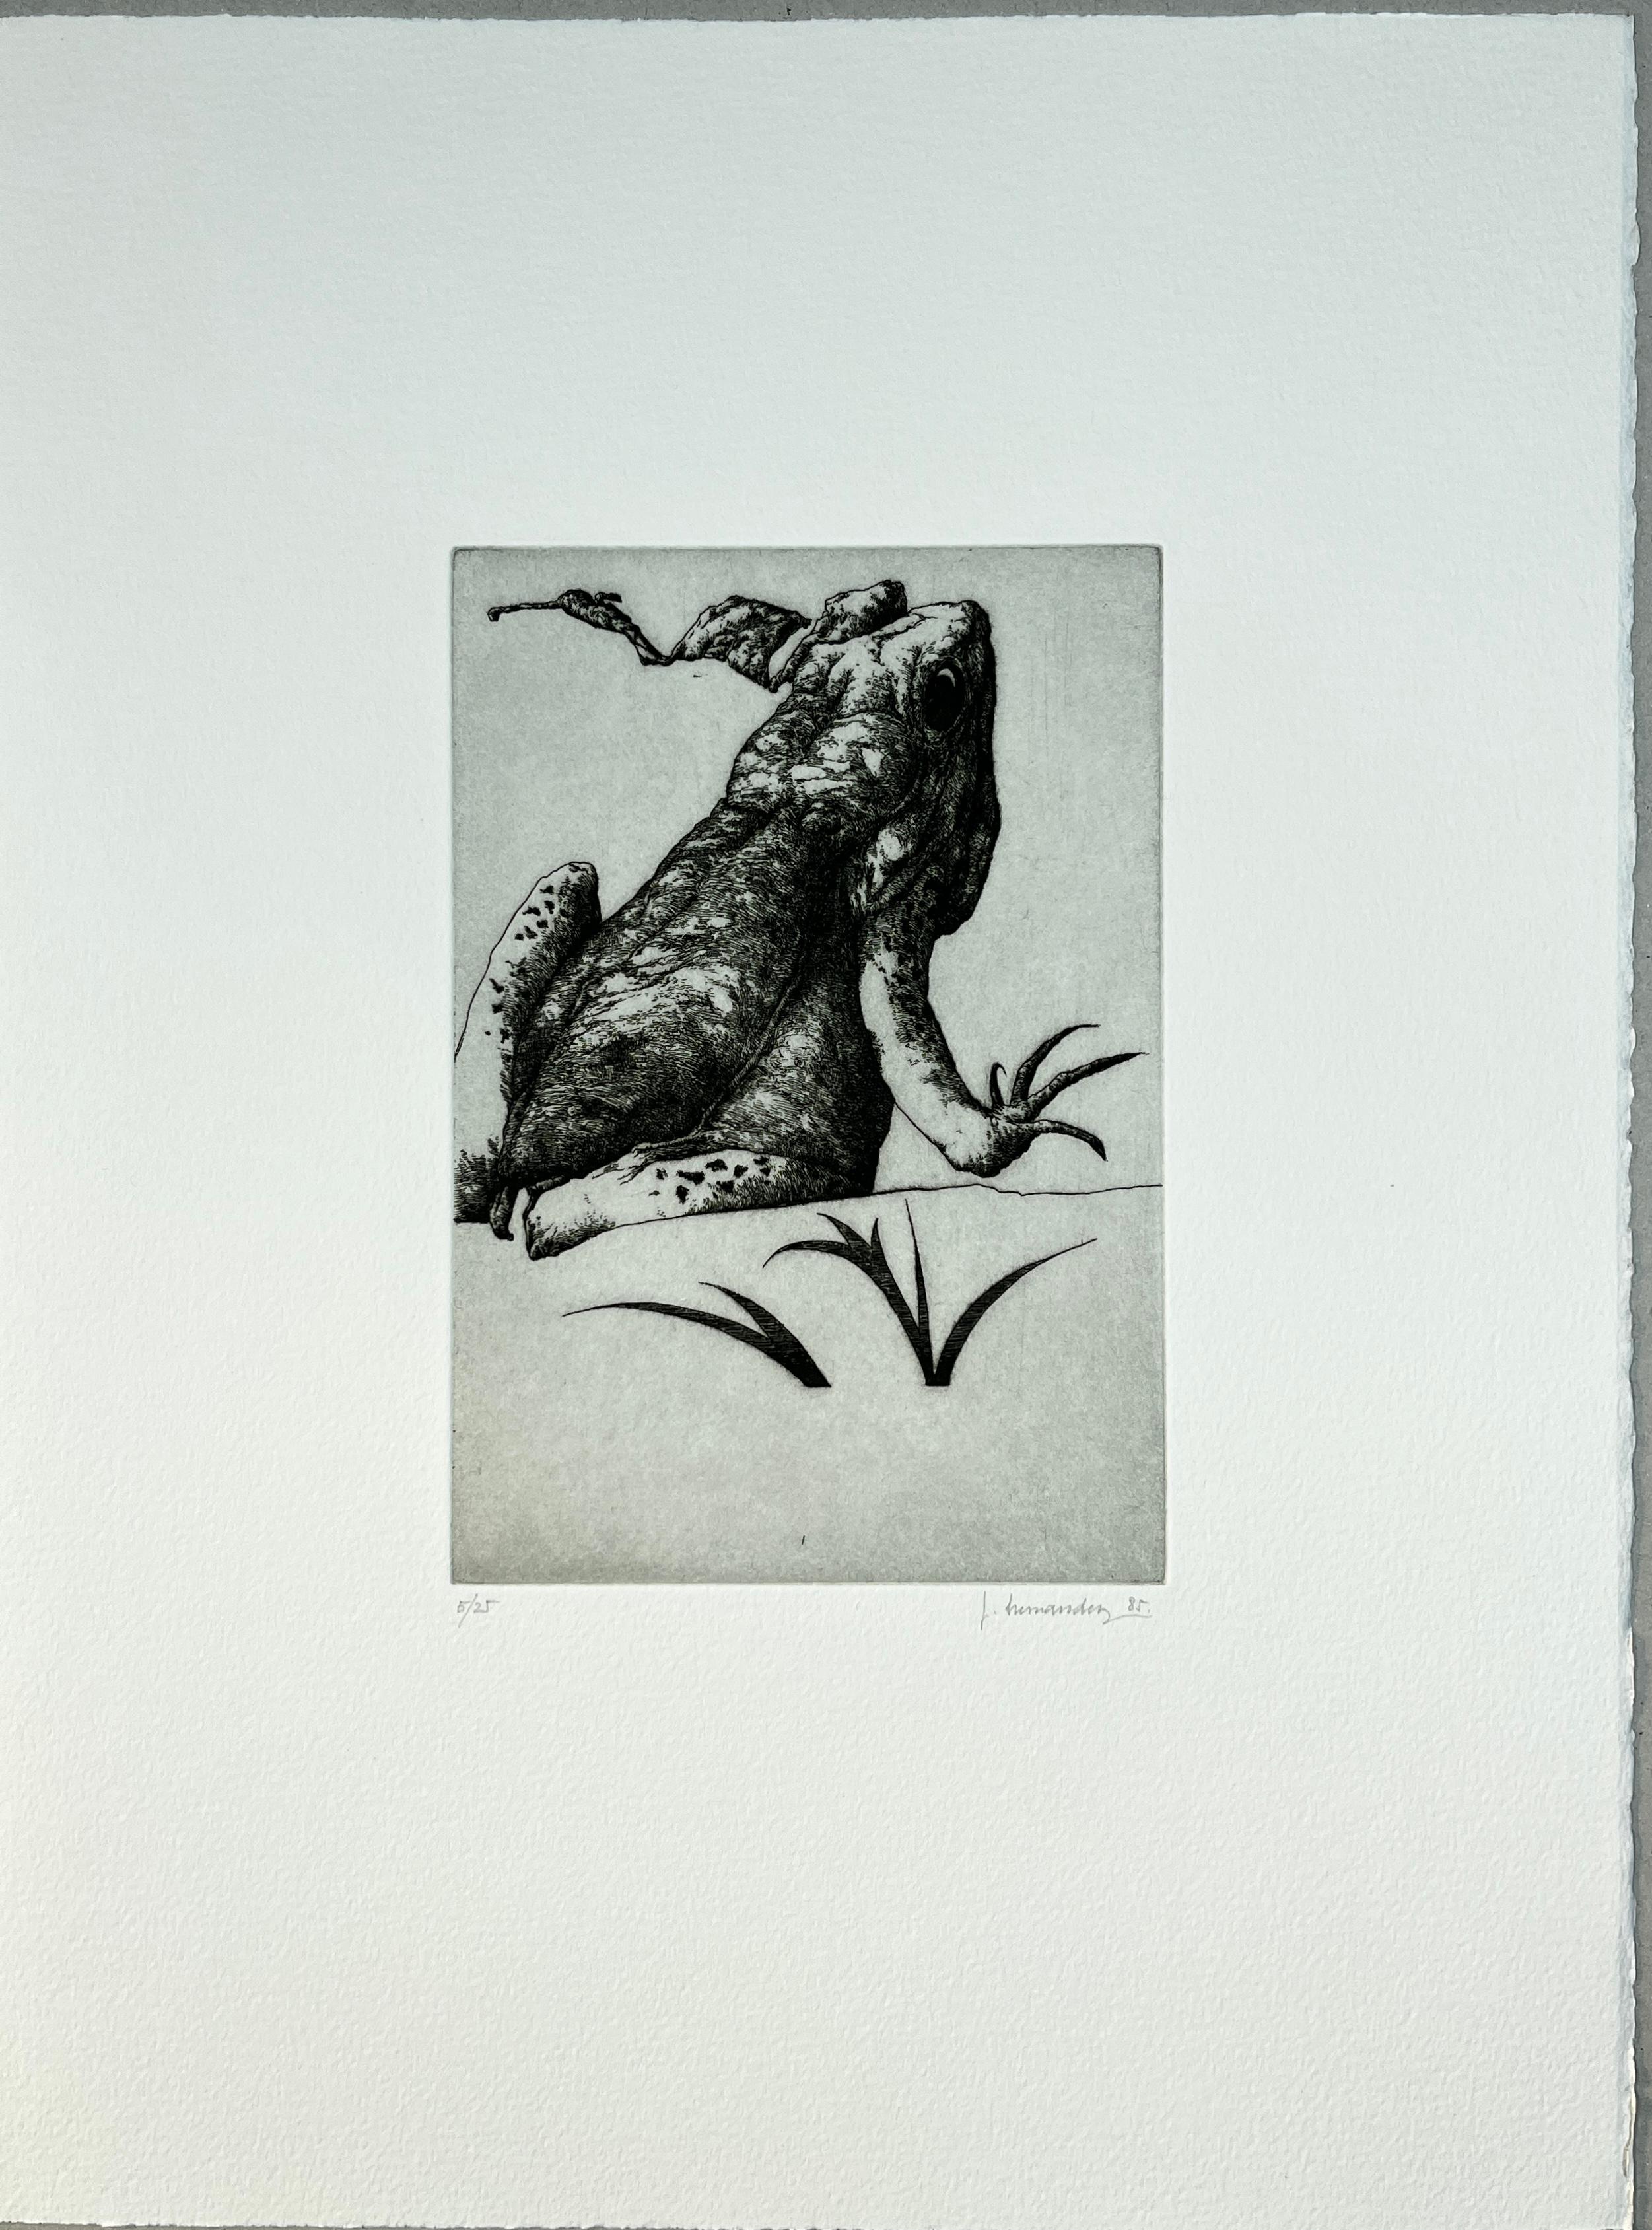 Spanish 1986 signed limited edition original art print etching 15x11 in. - Print by Jose Hernandez Muñoz